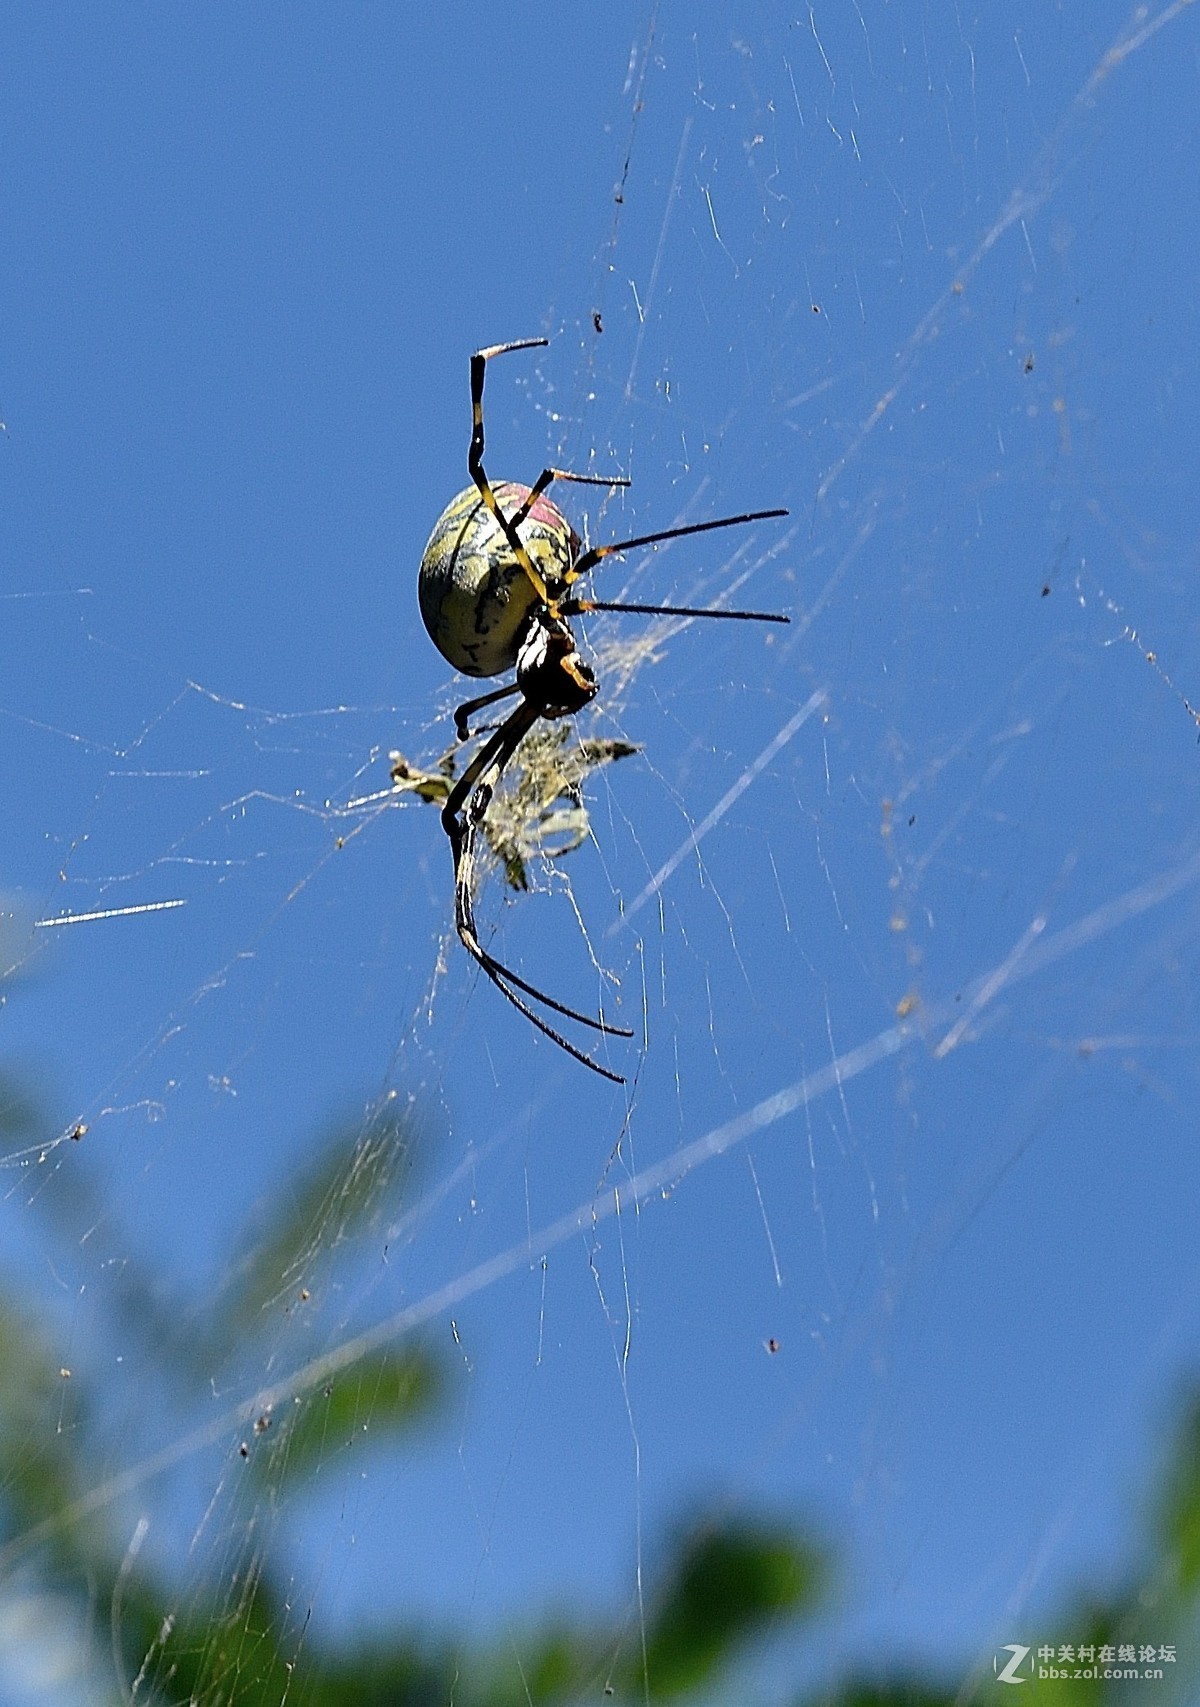 hanabunny蜘蛛图片